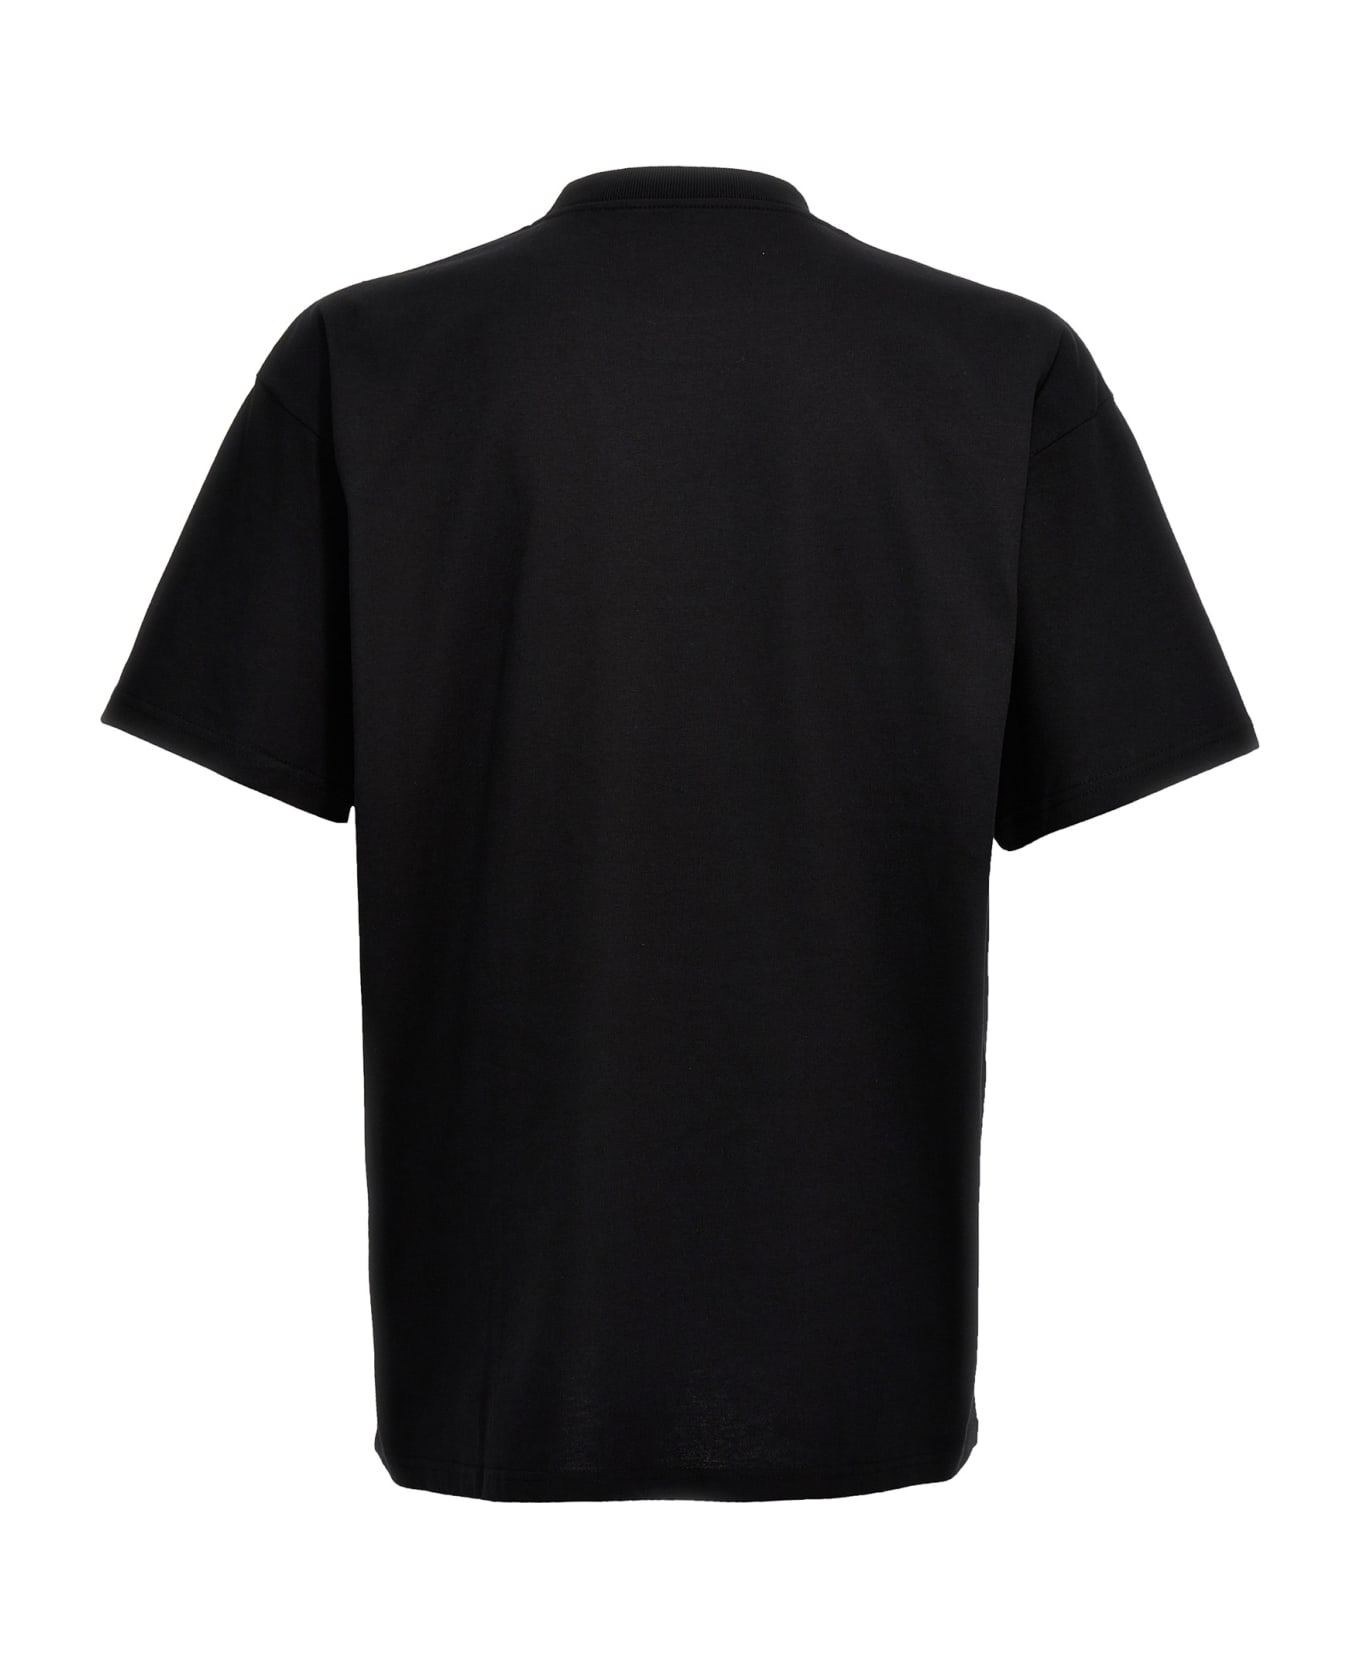 Carhartt 'icons' T-shirt - White/Black